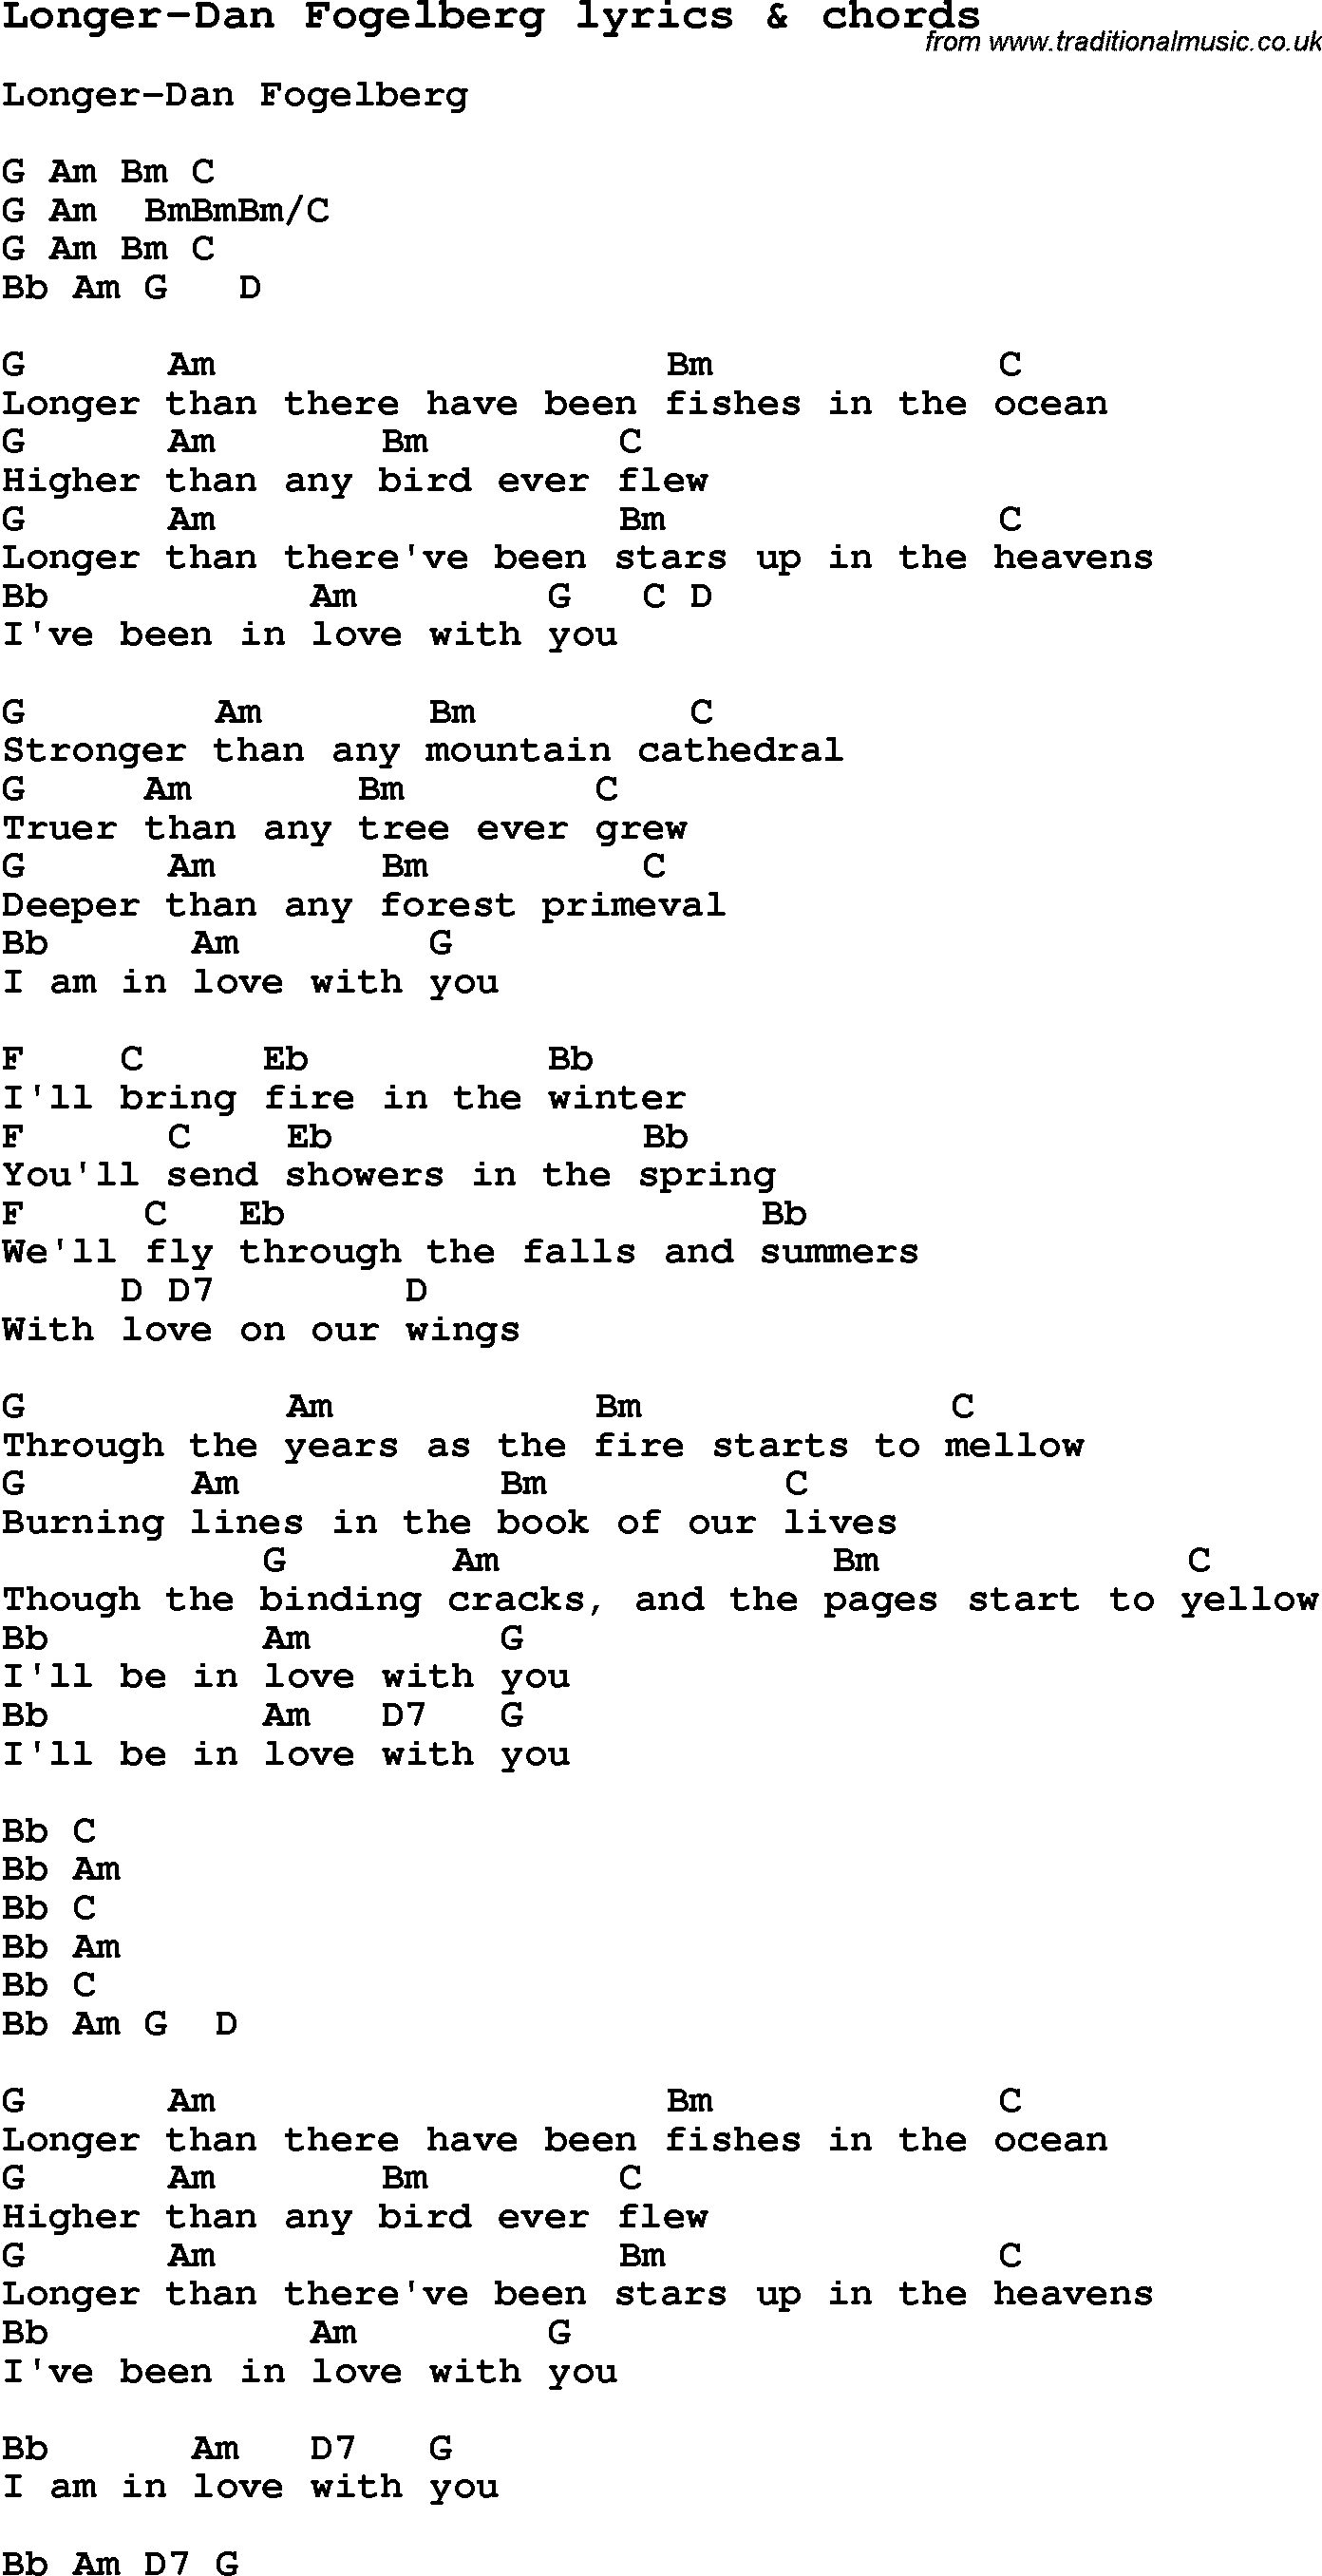 Love Song Lyrics for: Longer-Dan Fogelberg with chords for Ukulele, Guitar Banjo etc.